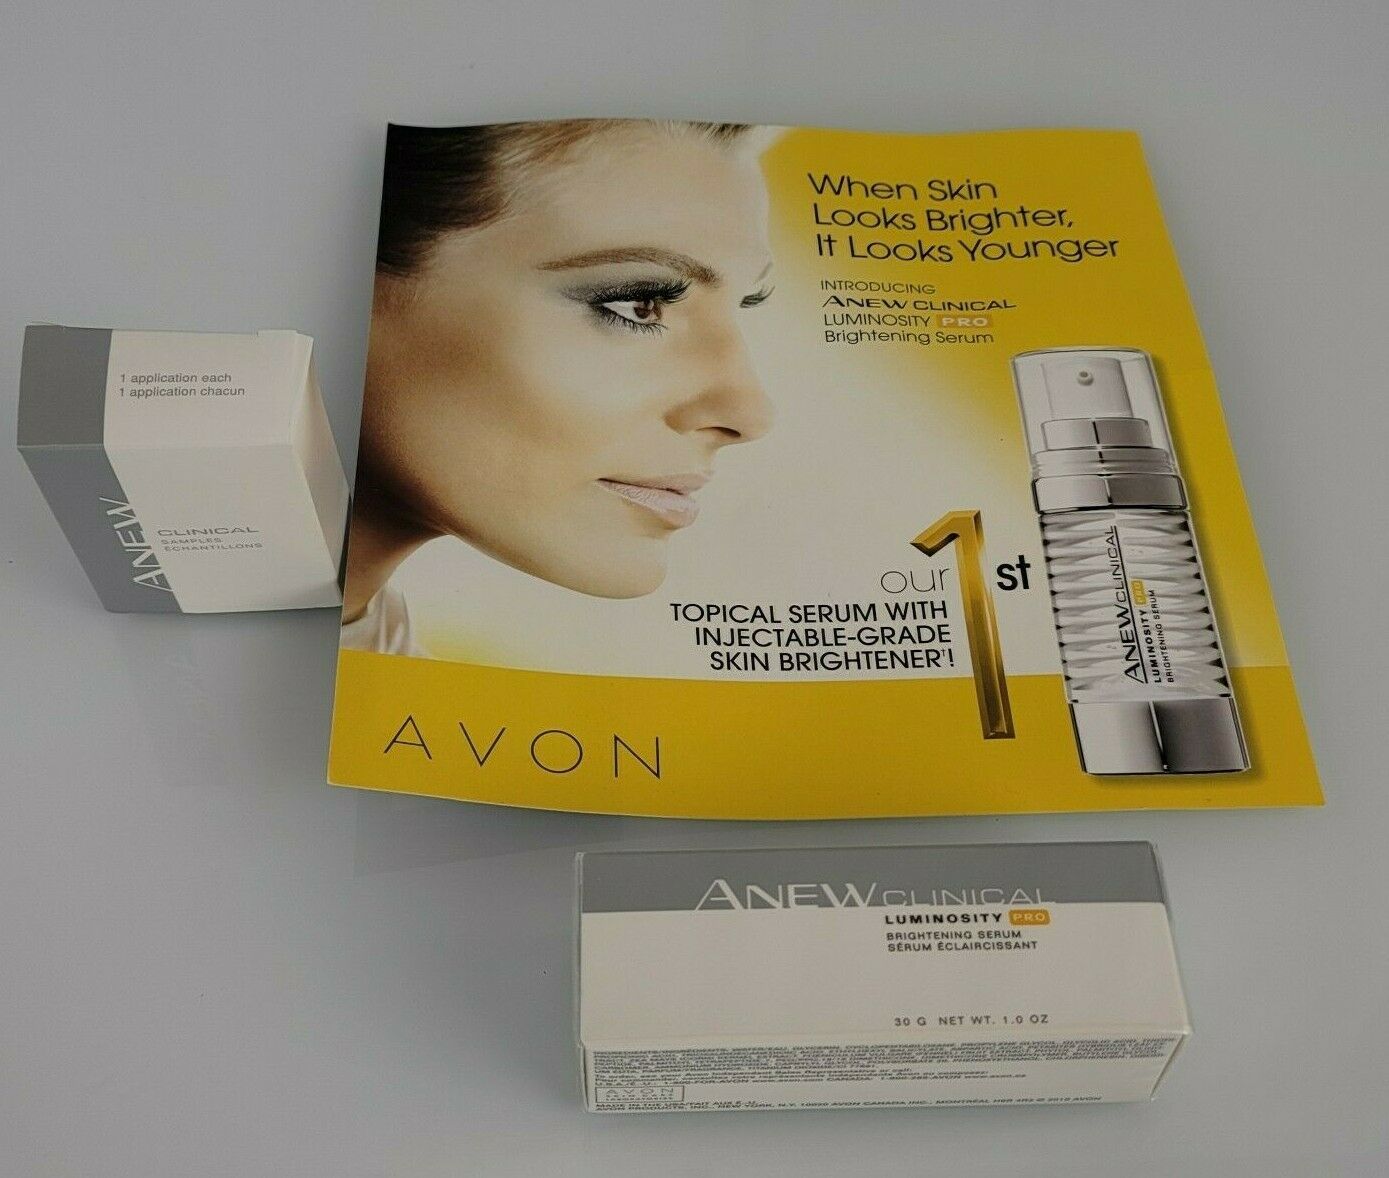 Primary image for Avon Anew Clinical Luminosity Pro Brightening Serum $54 - NIB - Factory Sealed